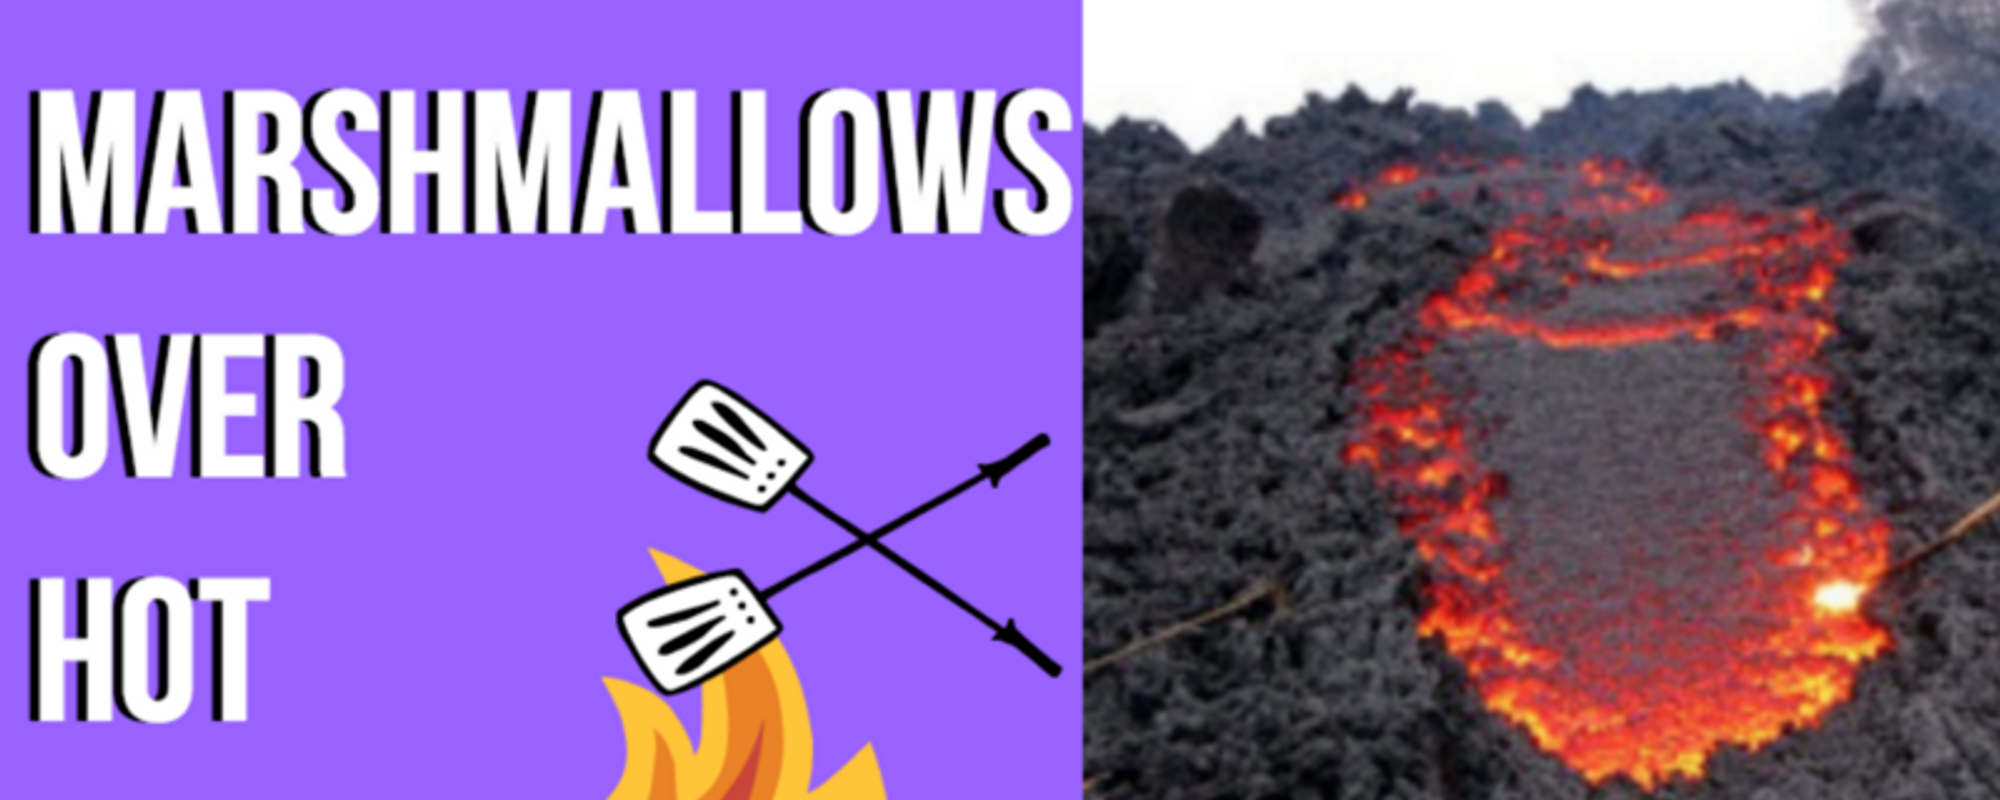 Roasting Marshmallows Over Hot Lava?!